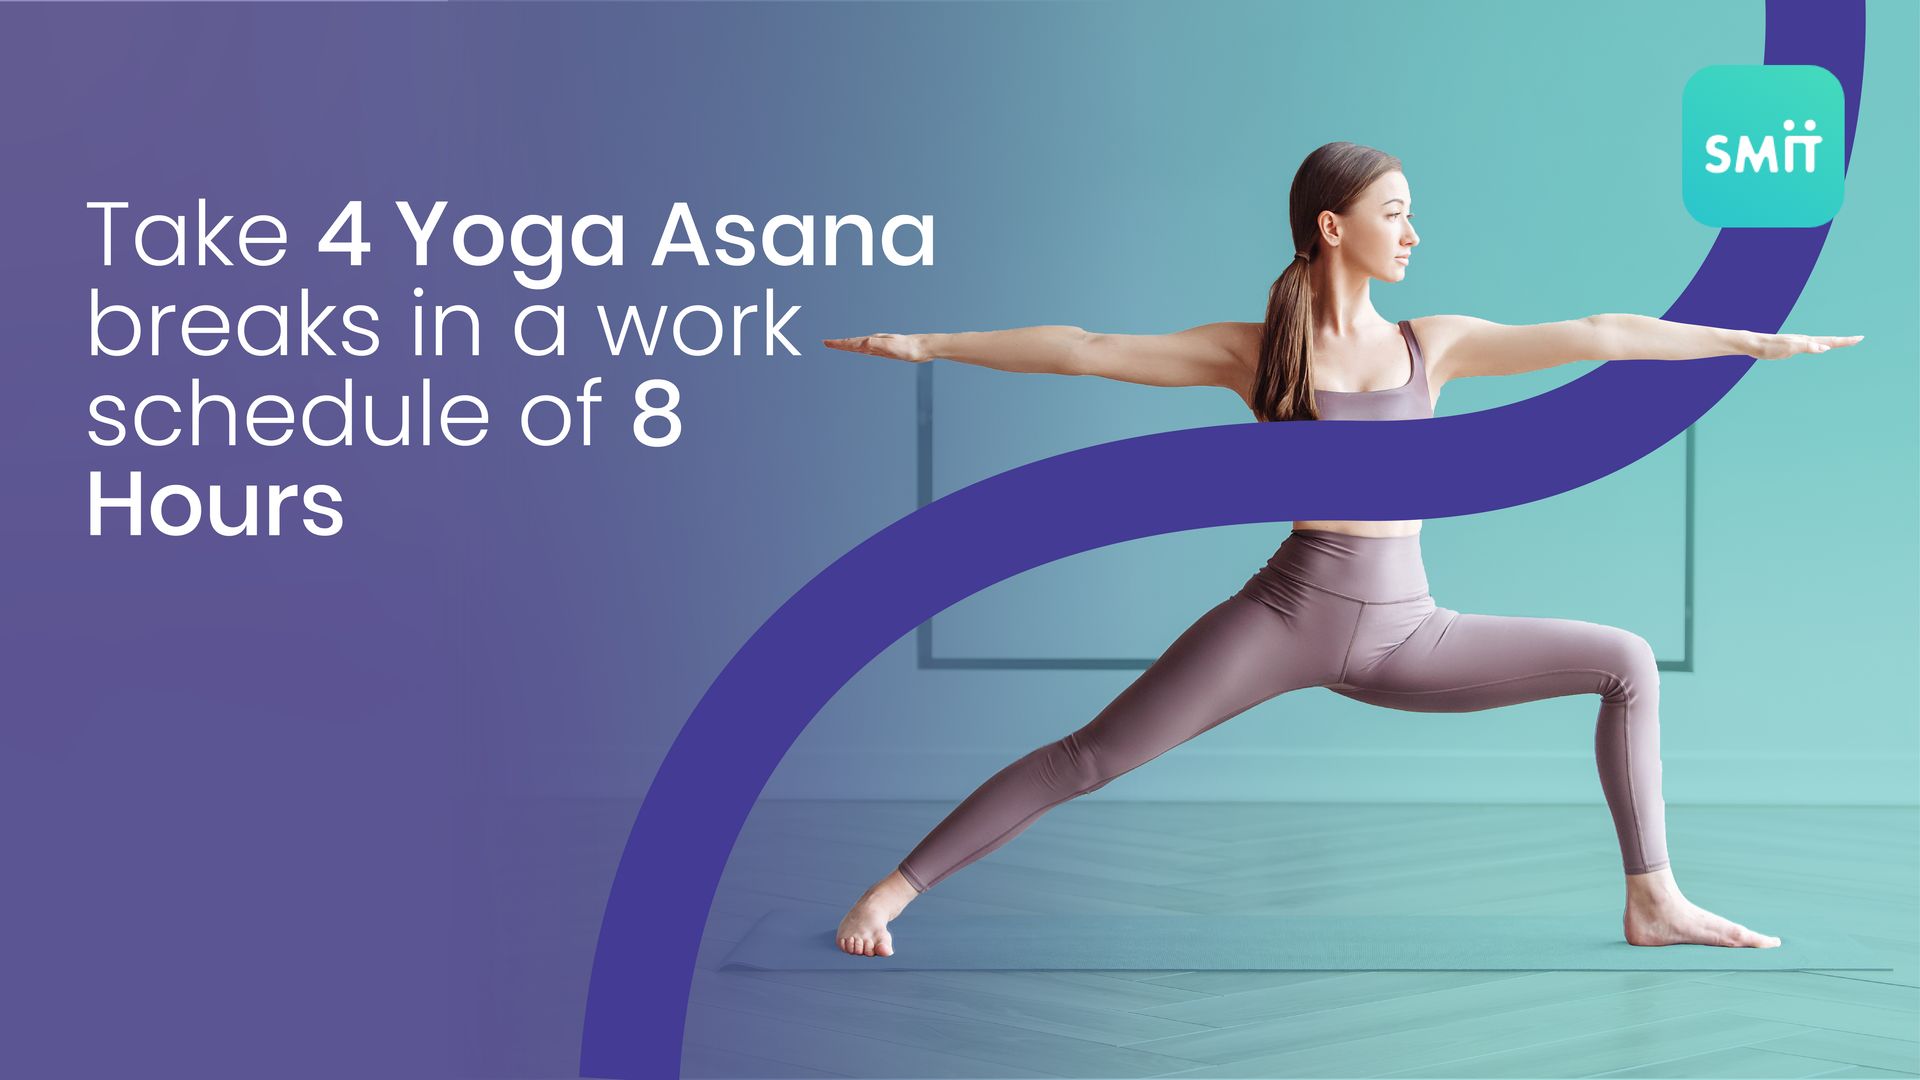 Take 4 yoga asana breaks in a work schedule of 8 hours